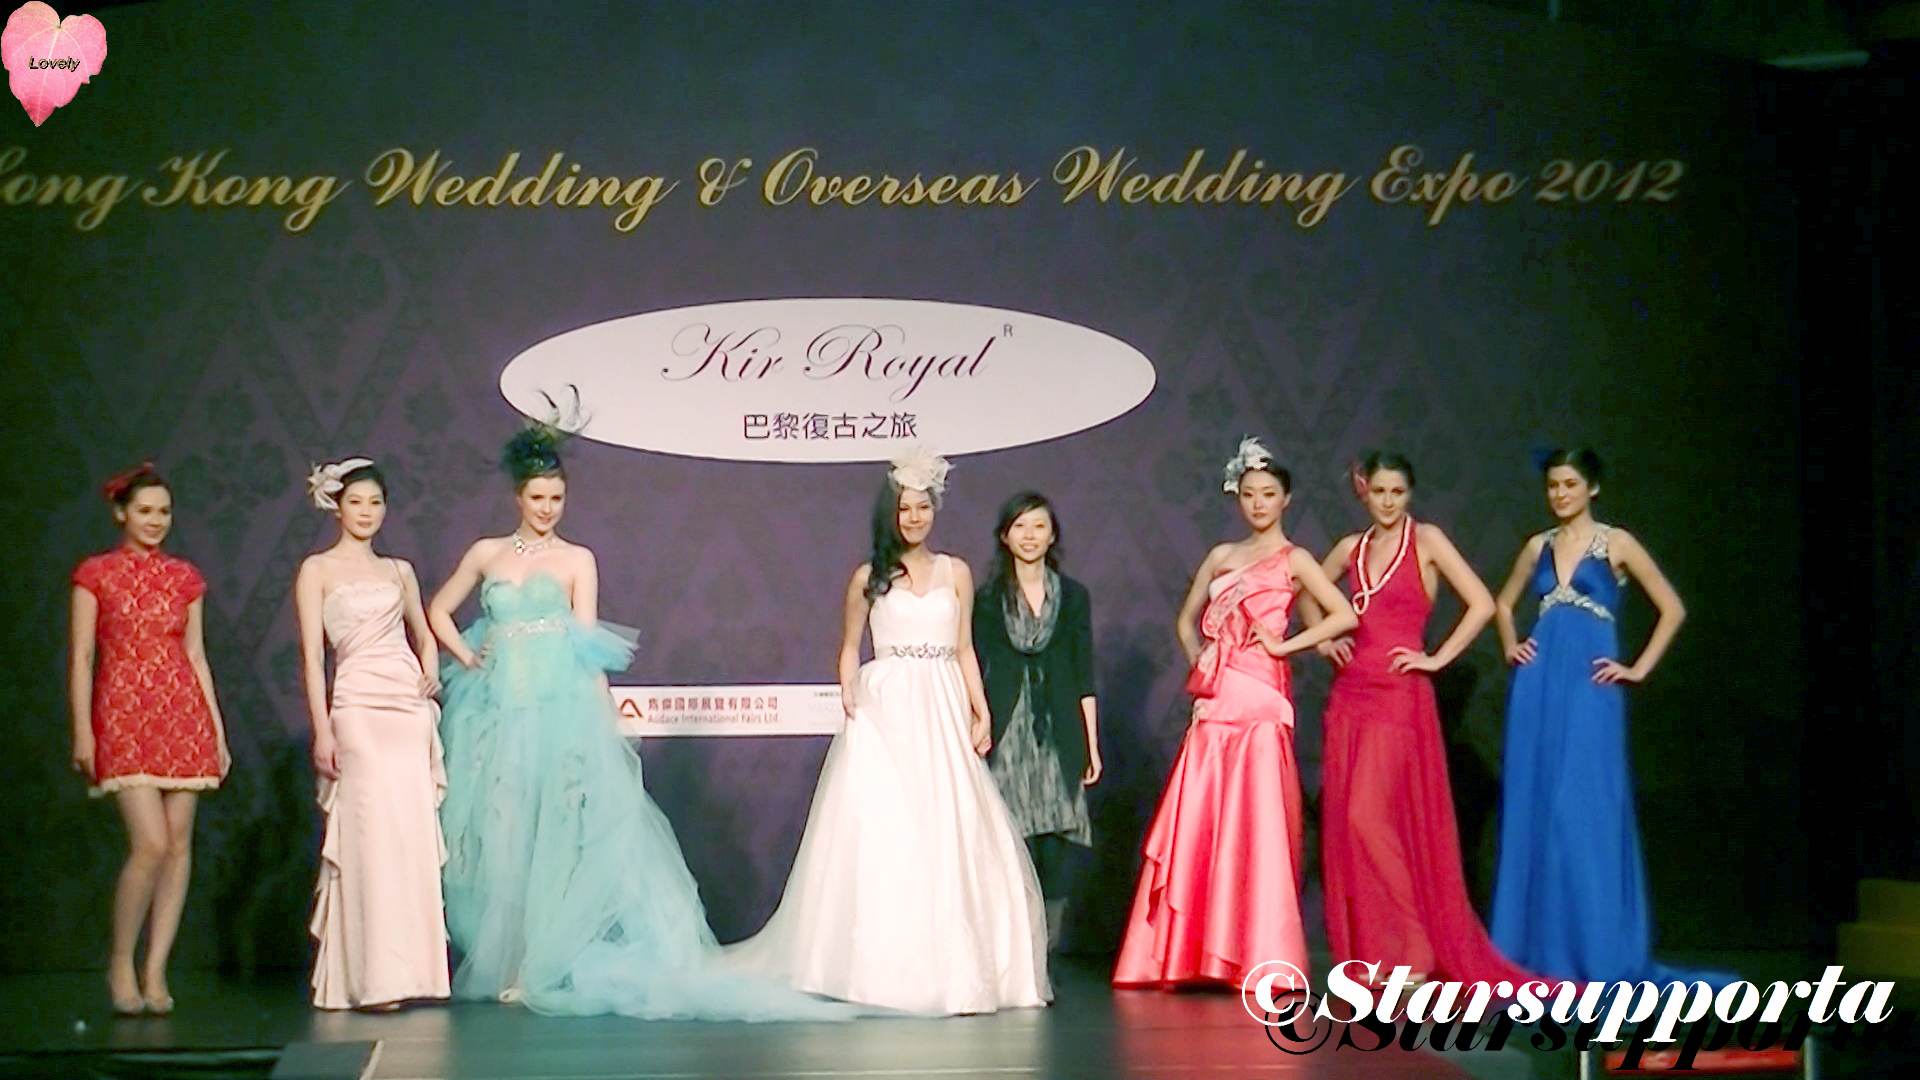 20120310 Hong Kong Wedding & Overseas Wedding Expo - Kir Royal: 巴黎復古之旅 @ 香港會議展覽中心 HKCEC (video)